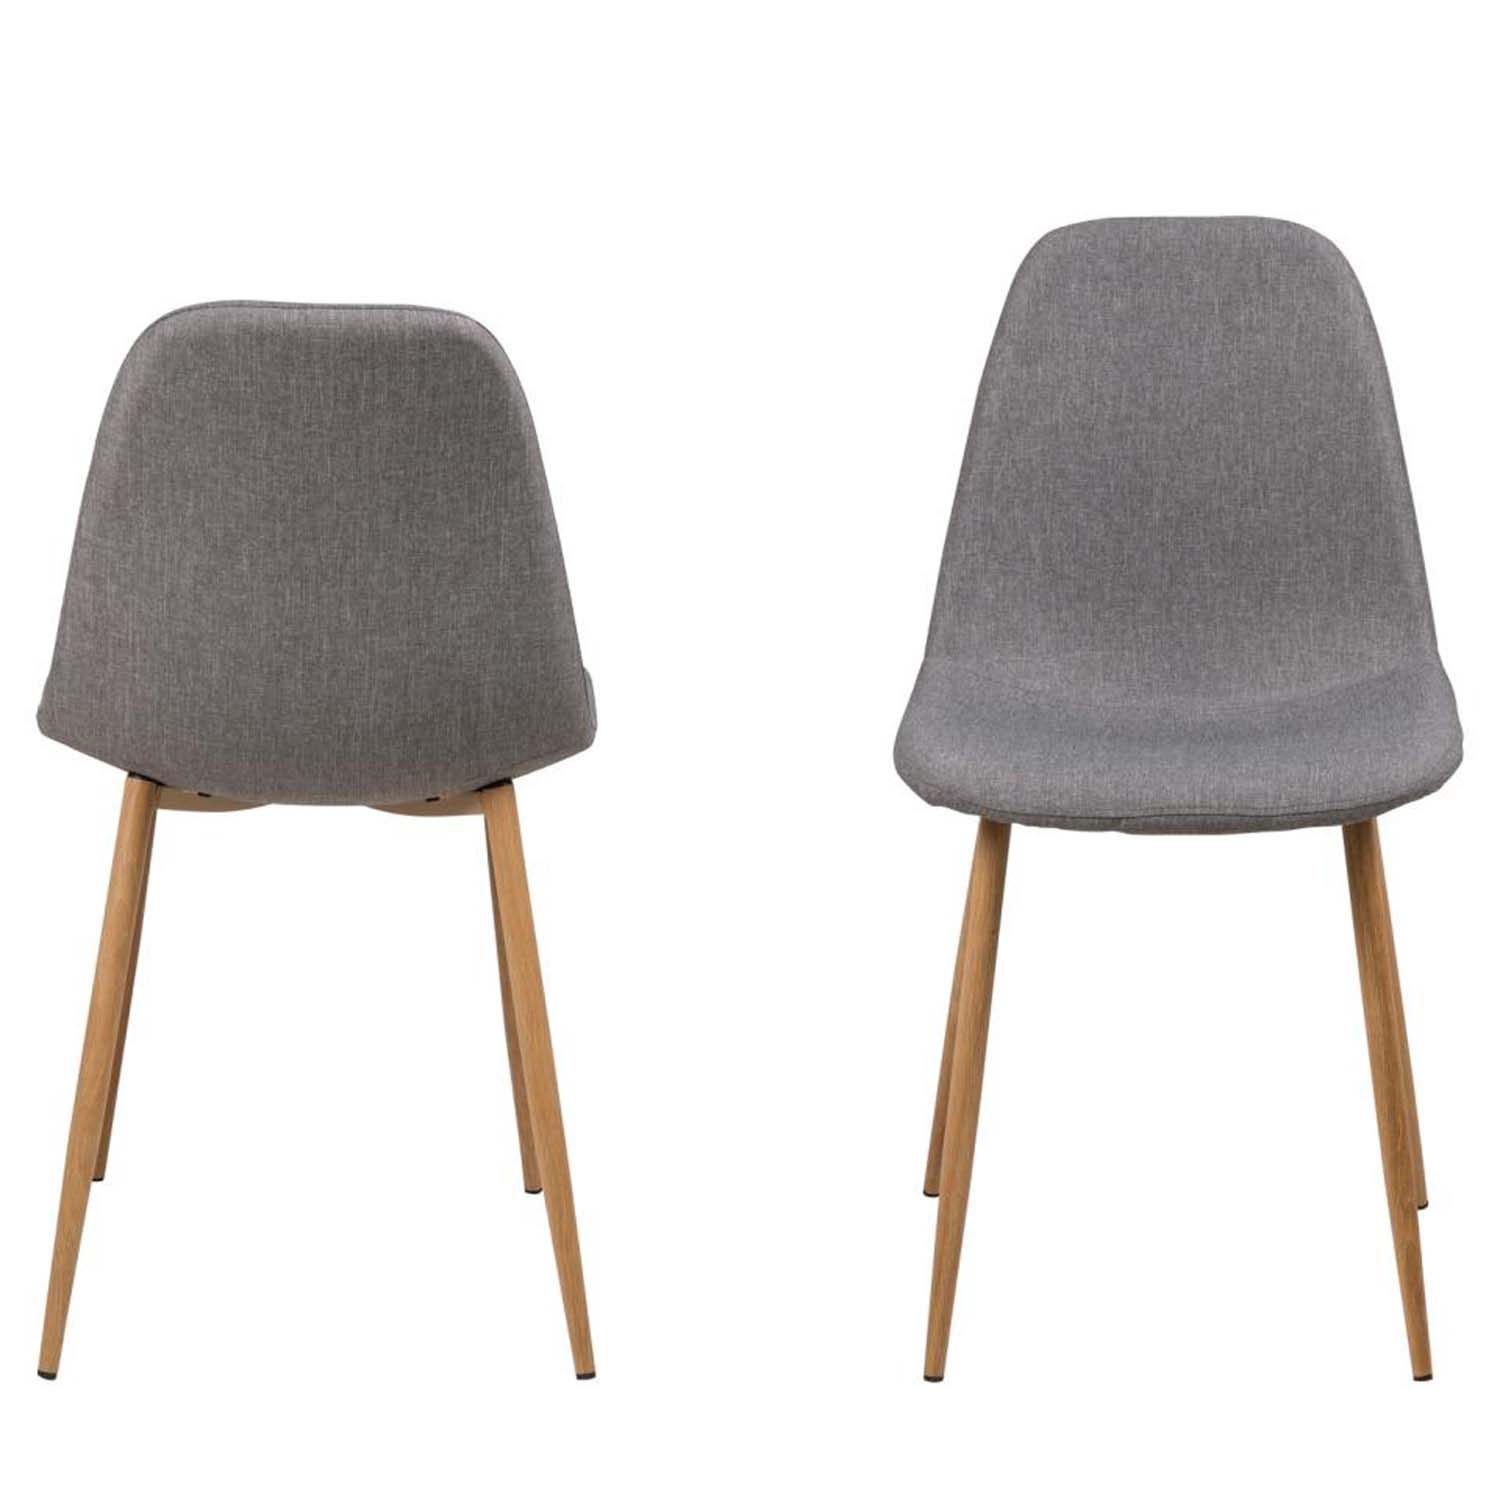 ACT NORDIC Wilma spisebordsstol - lysegrå polyester og egefolie metal